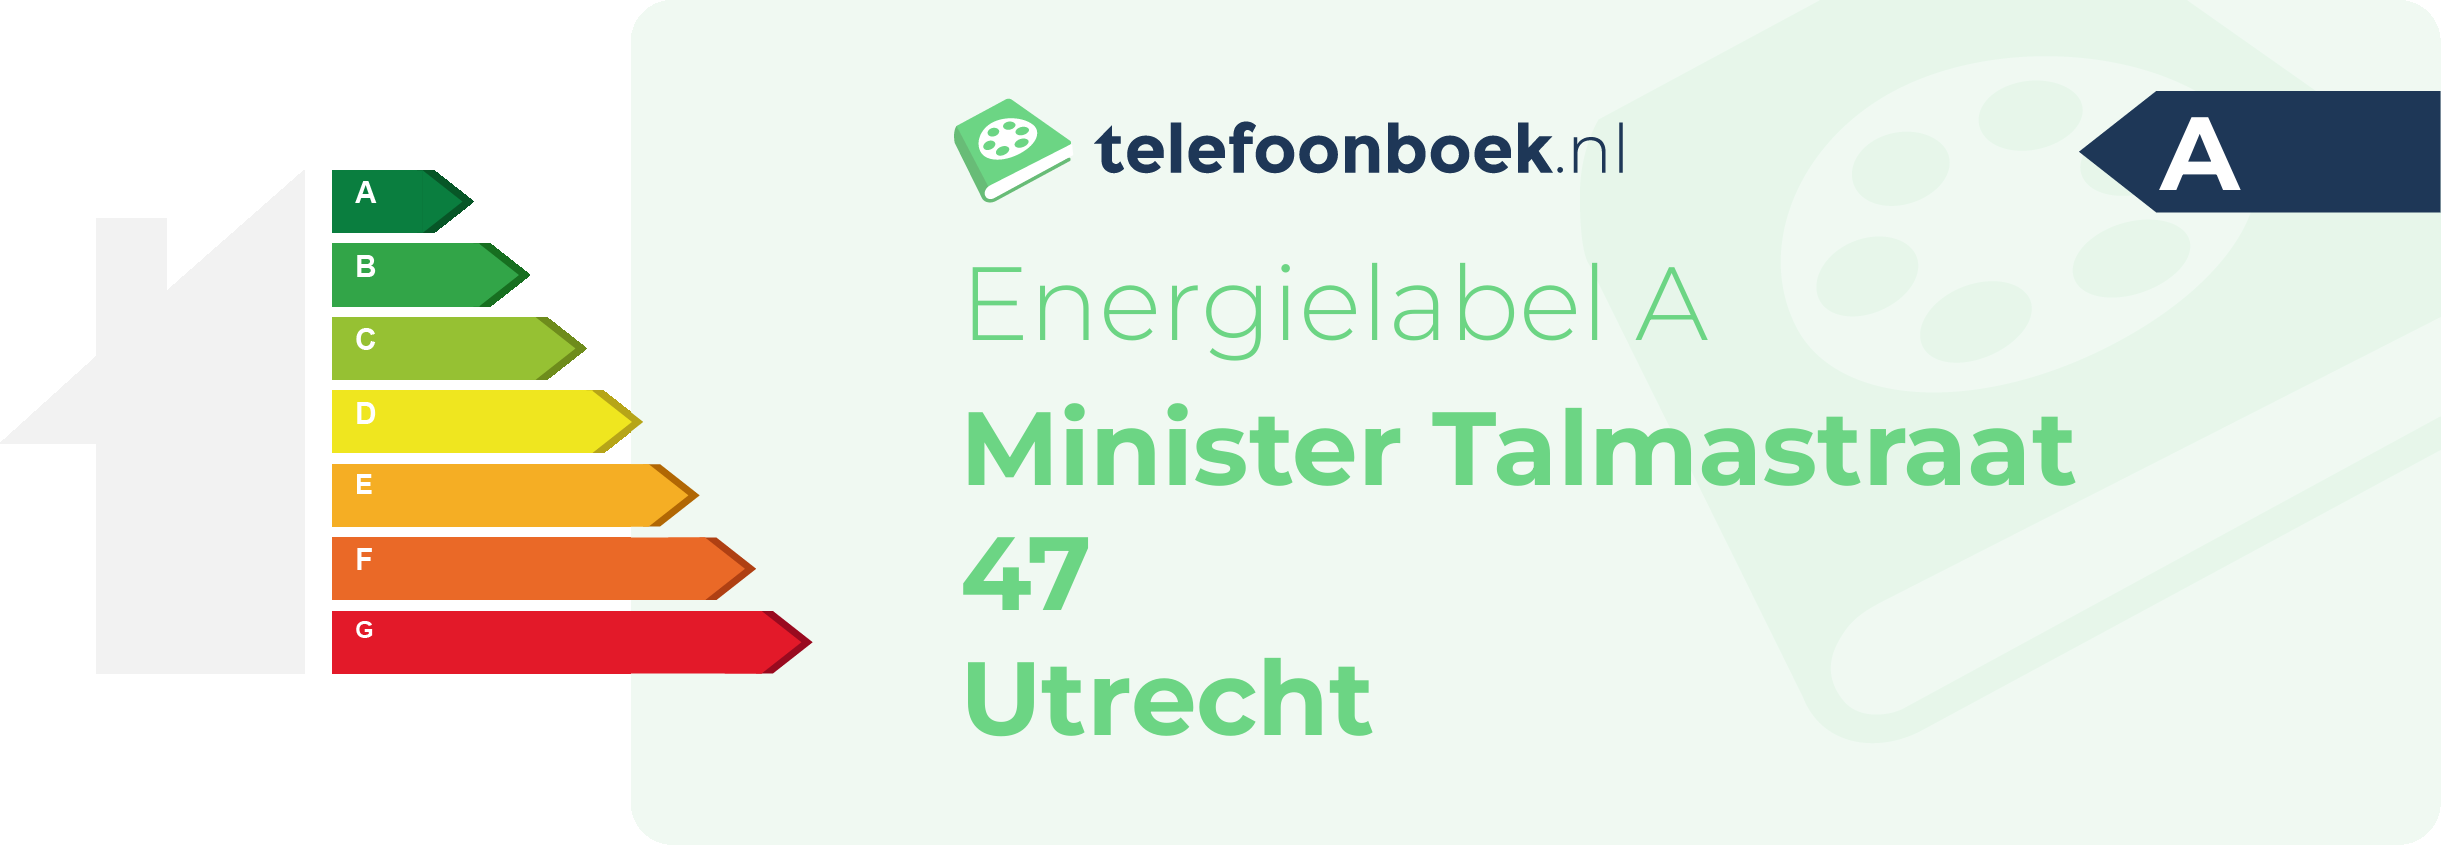 Energielabel Minister Talmastraat 47 Utrecht